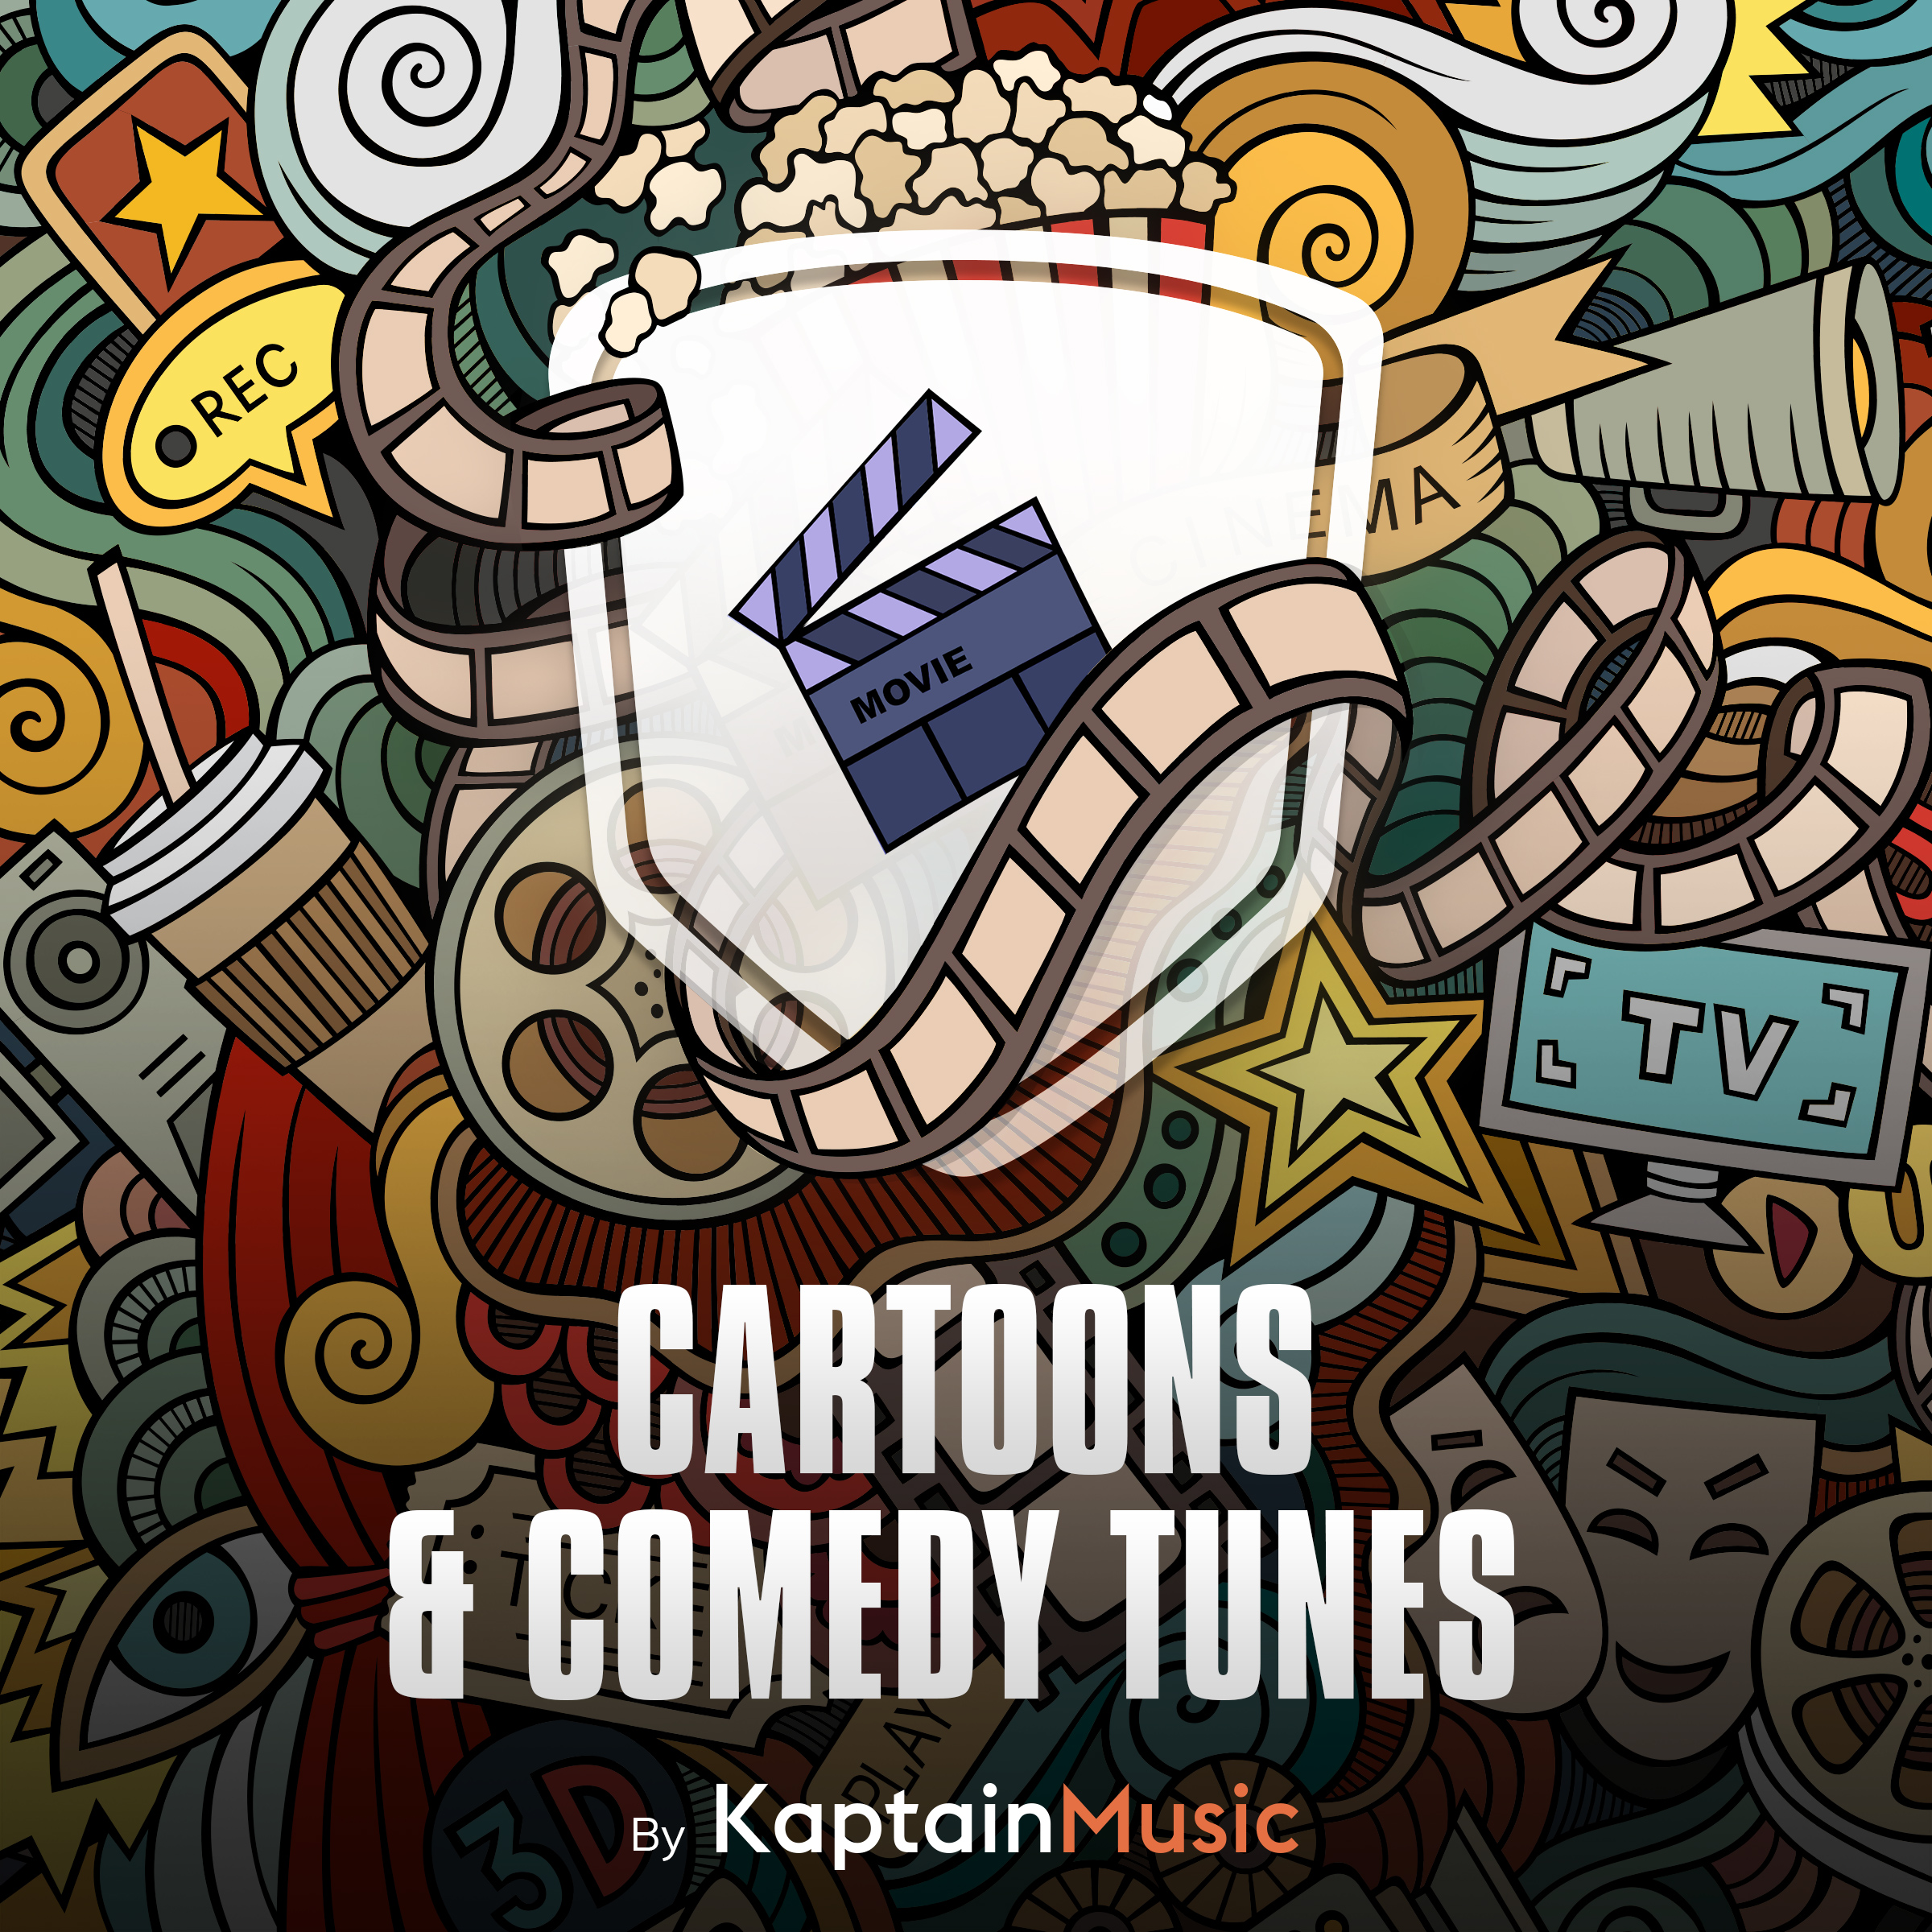 Cartoons & Comedy Tunes